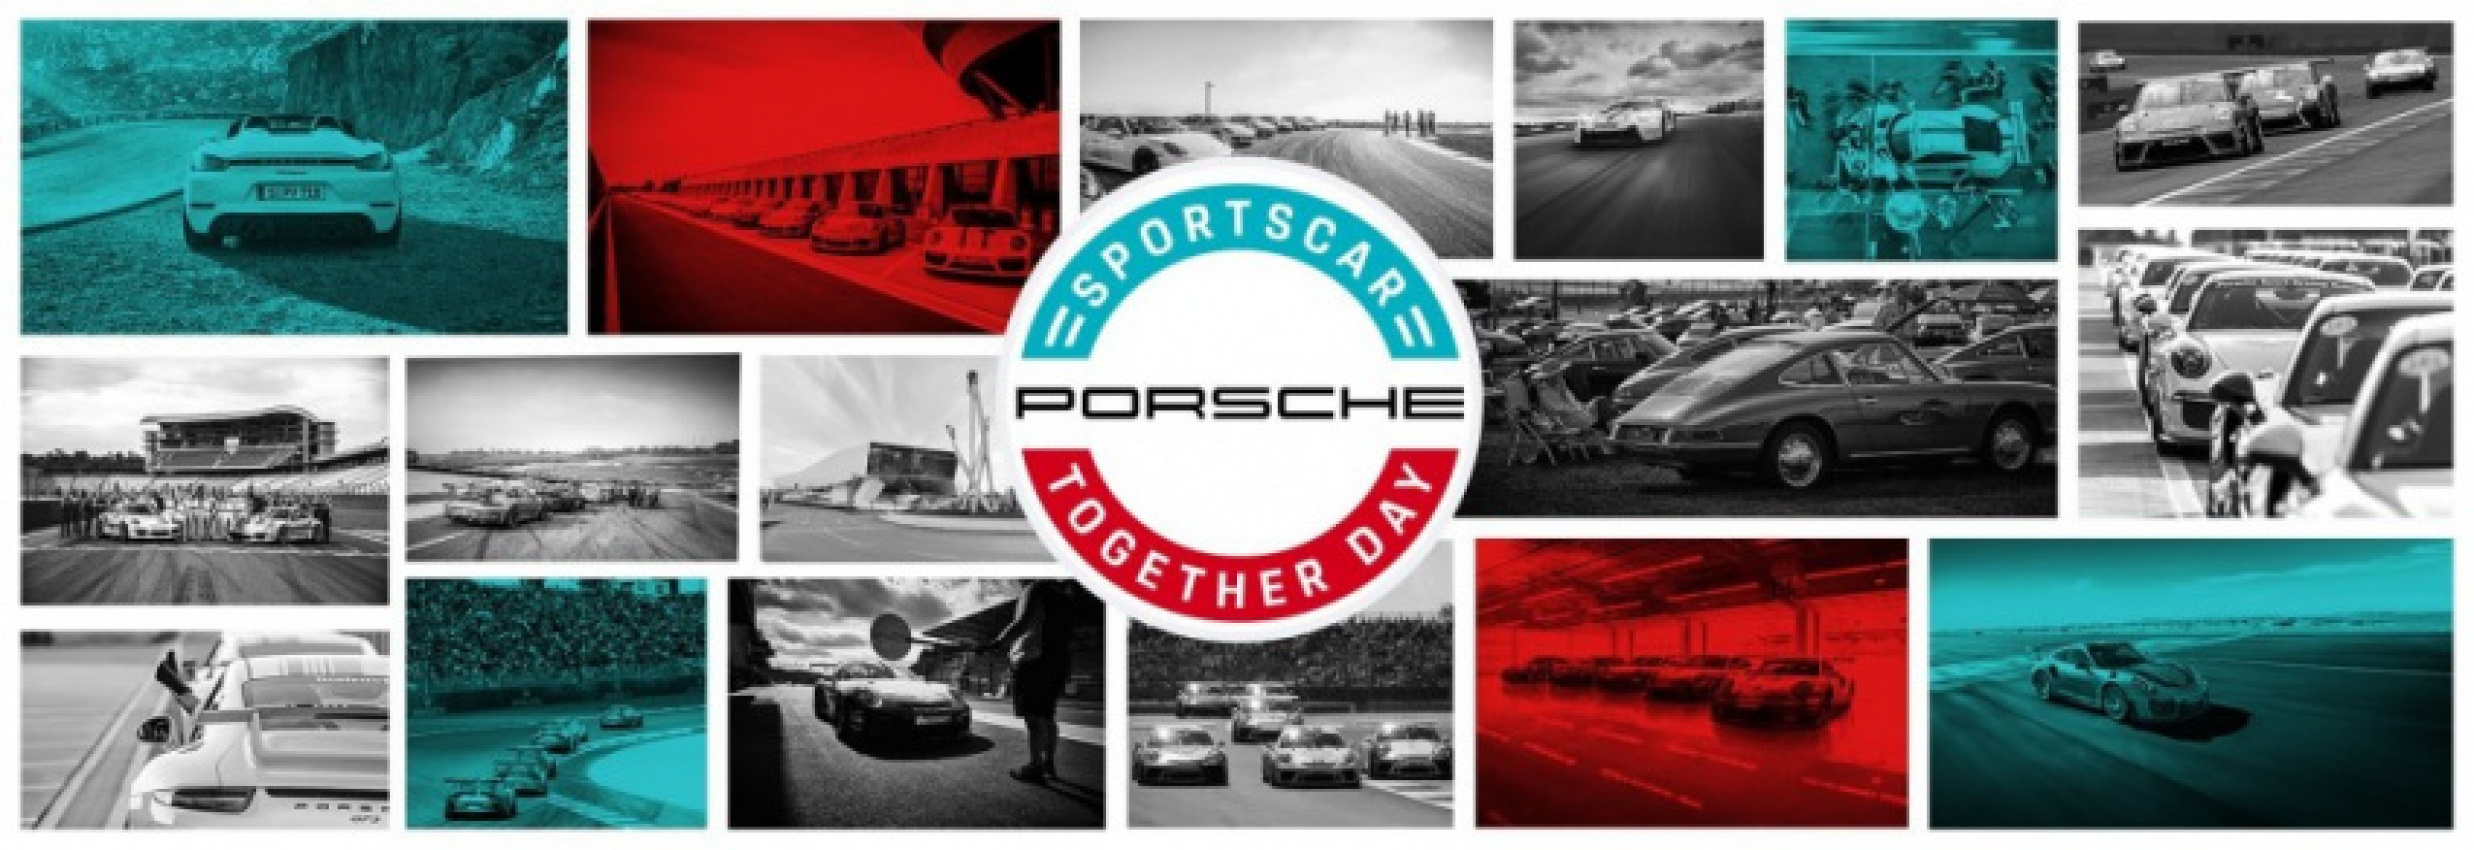 autos, cars, porsche, autos porsche, porsche sportscar together day happening this weekend in sepang!